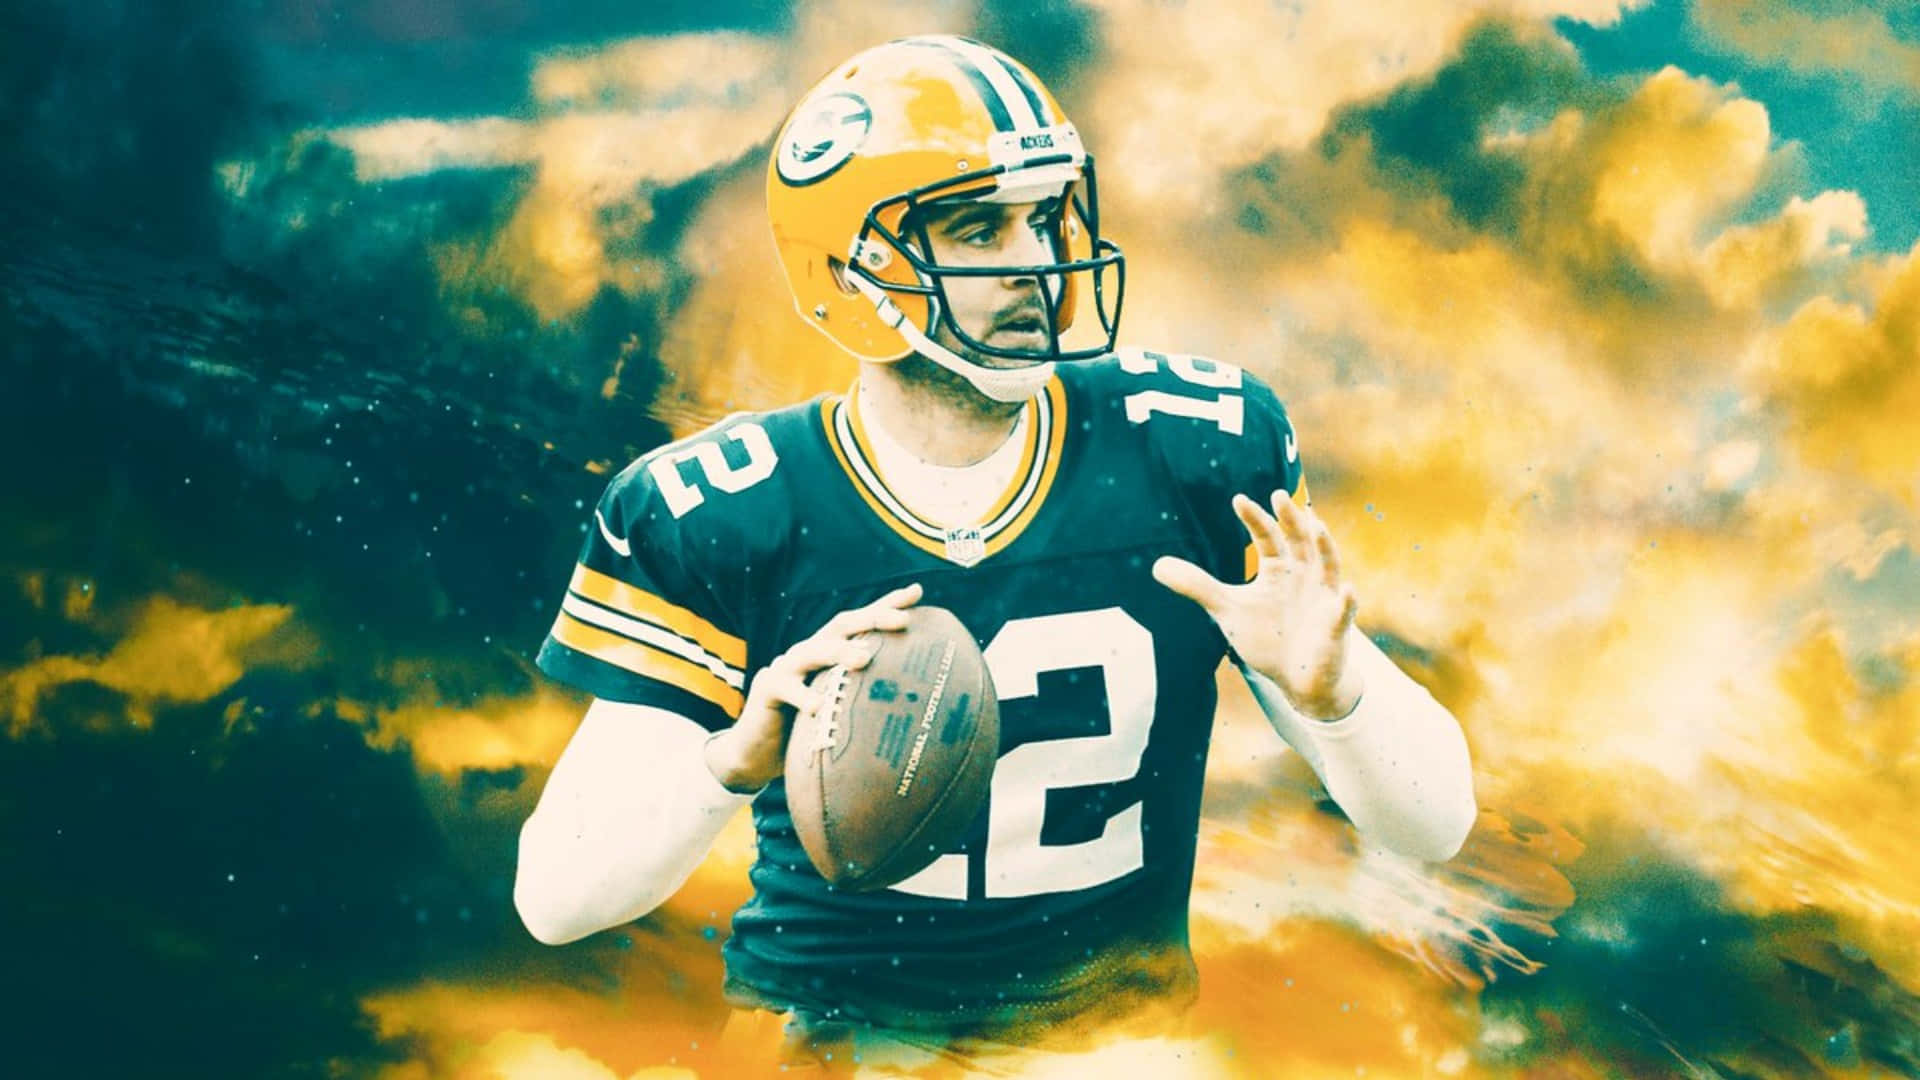 NFL star quarterback Aaron Rodgers